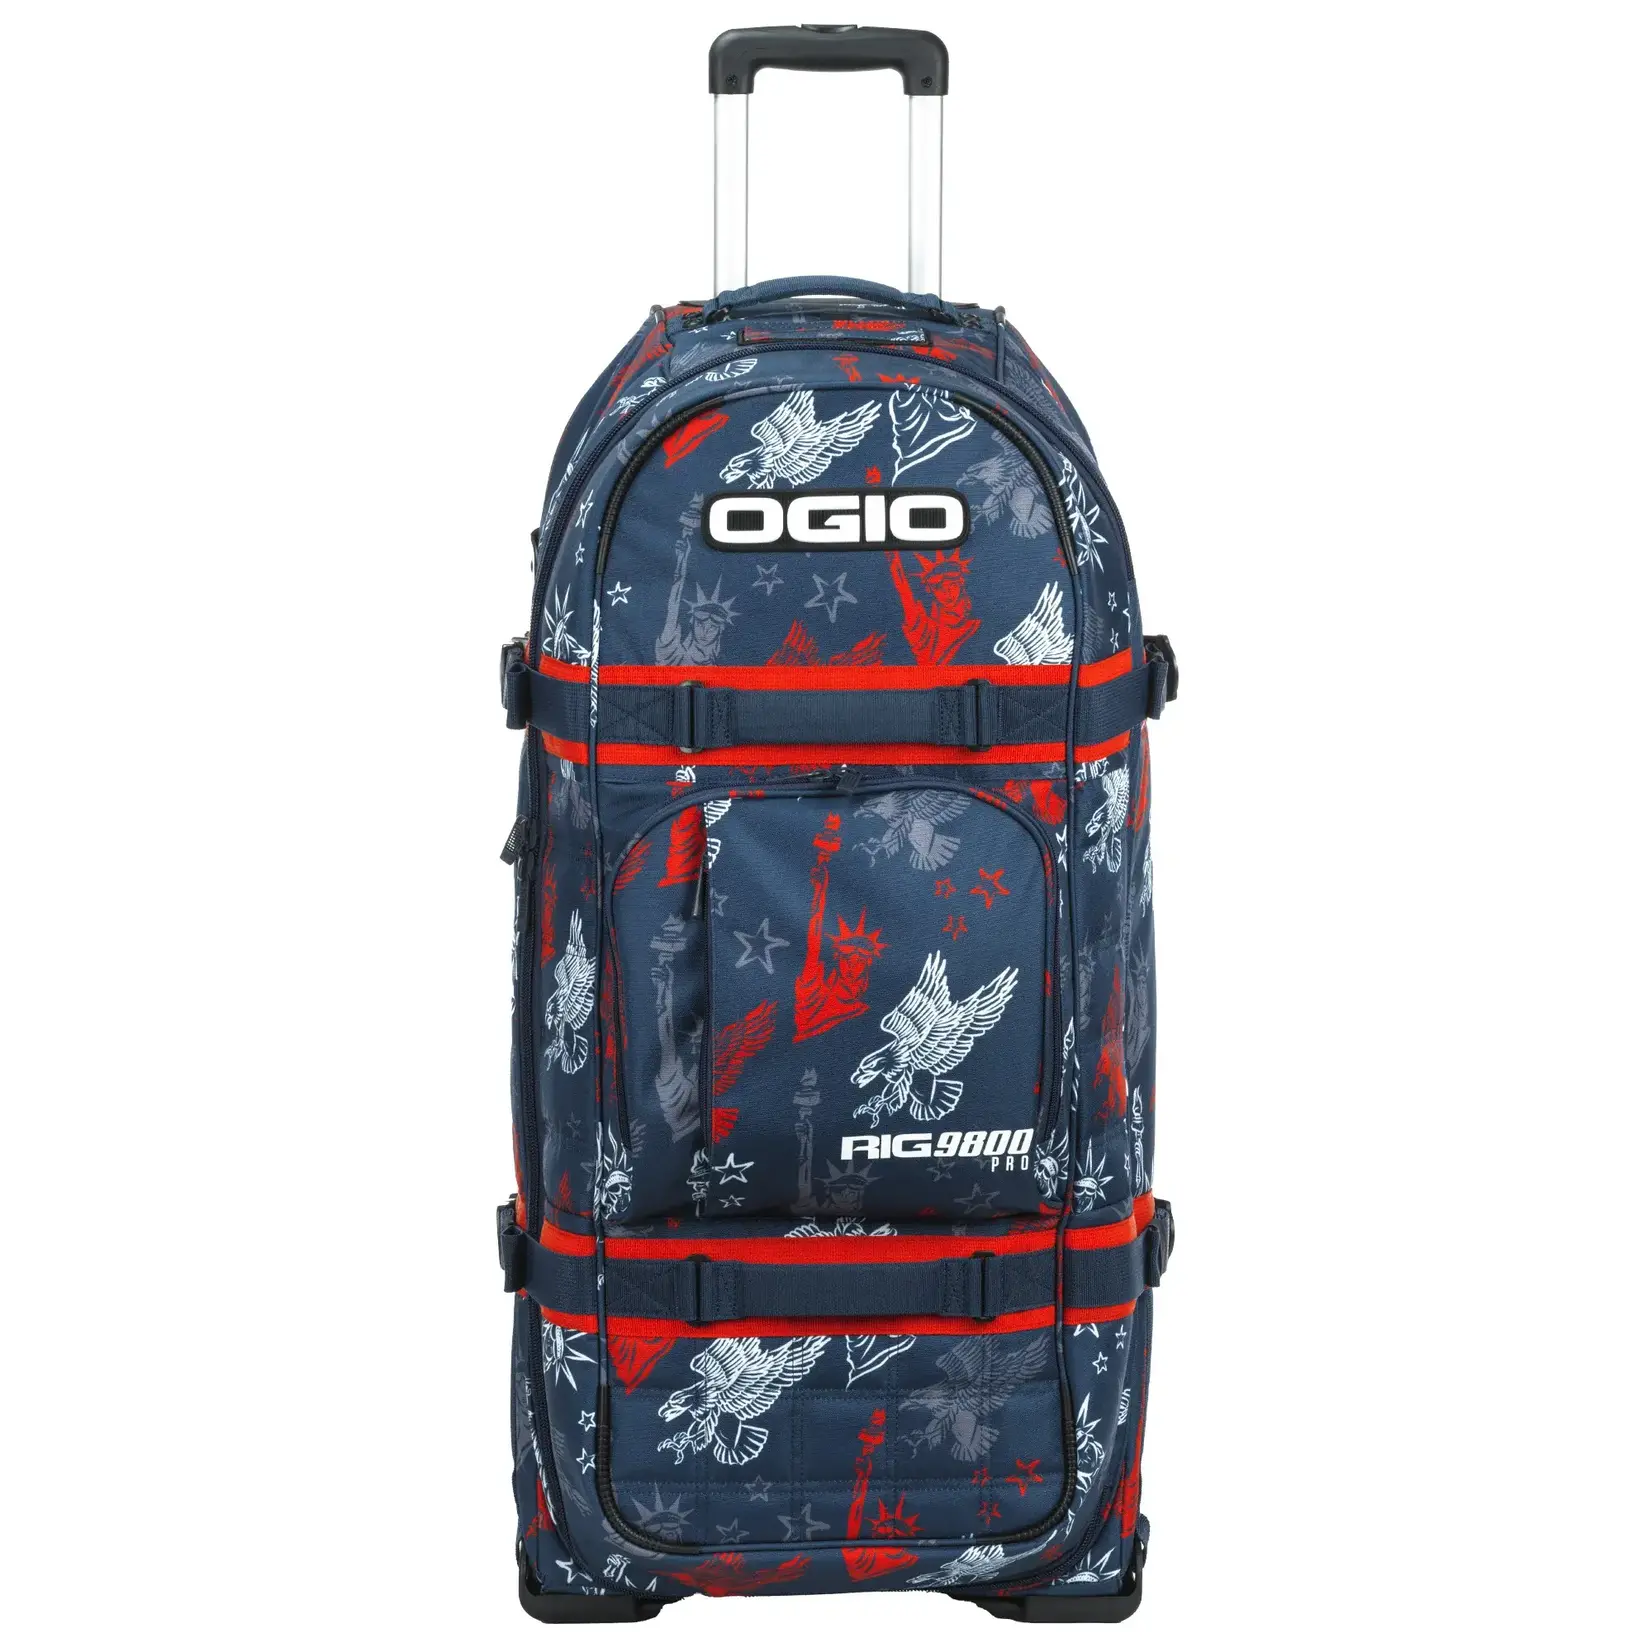 ogio Ogio 9800 Pro Bag We Trust